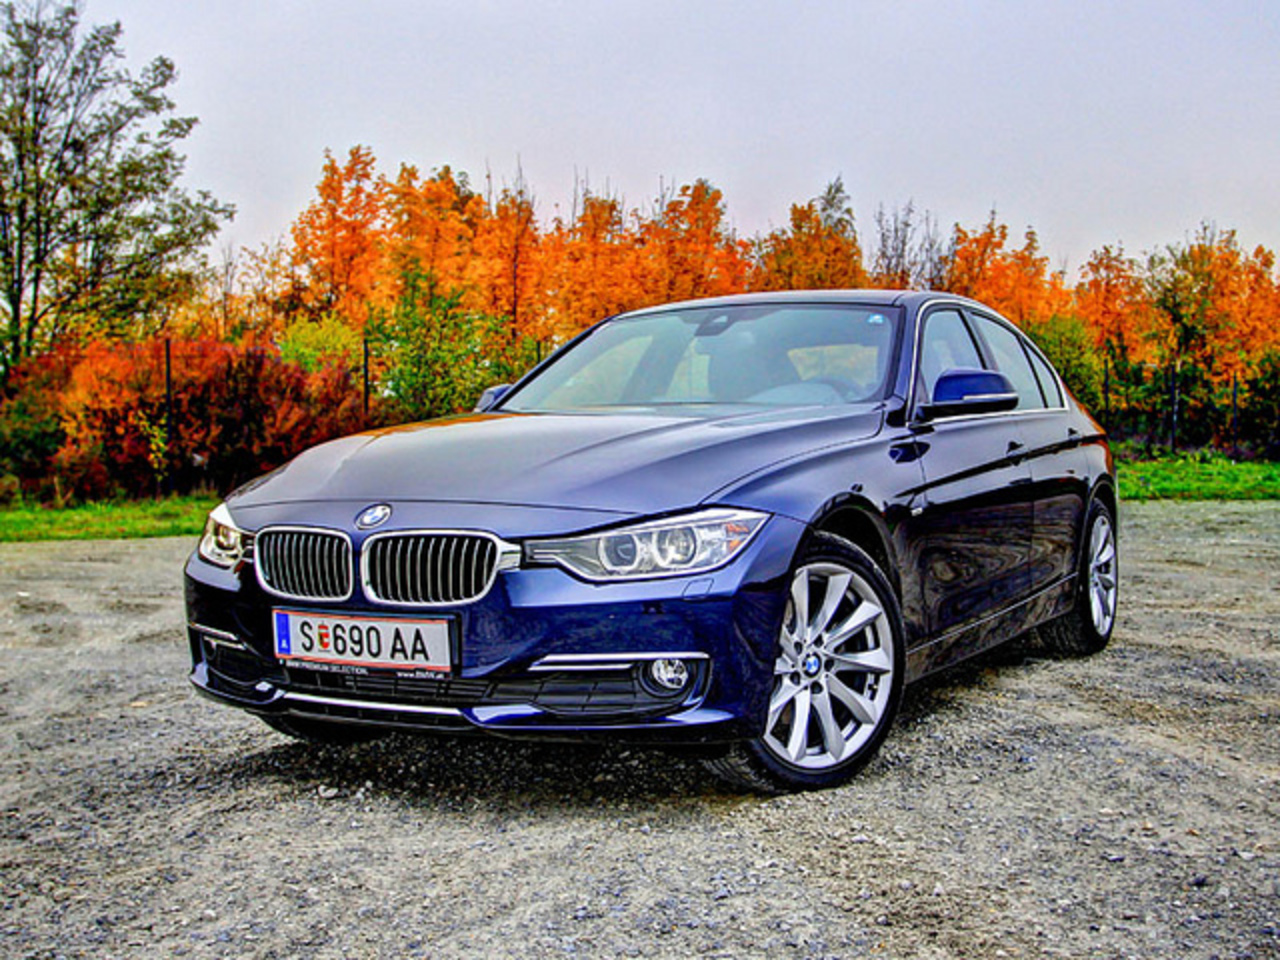 BMW 320d xDrive | Flickr - Photo Sharing!